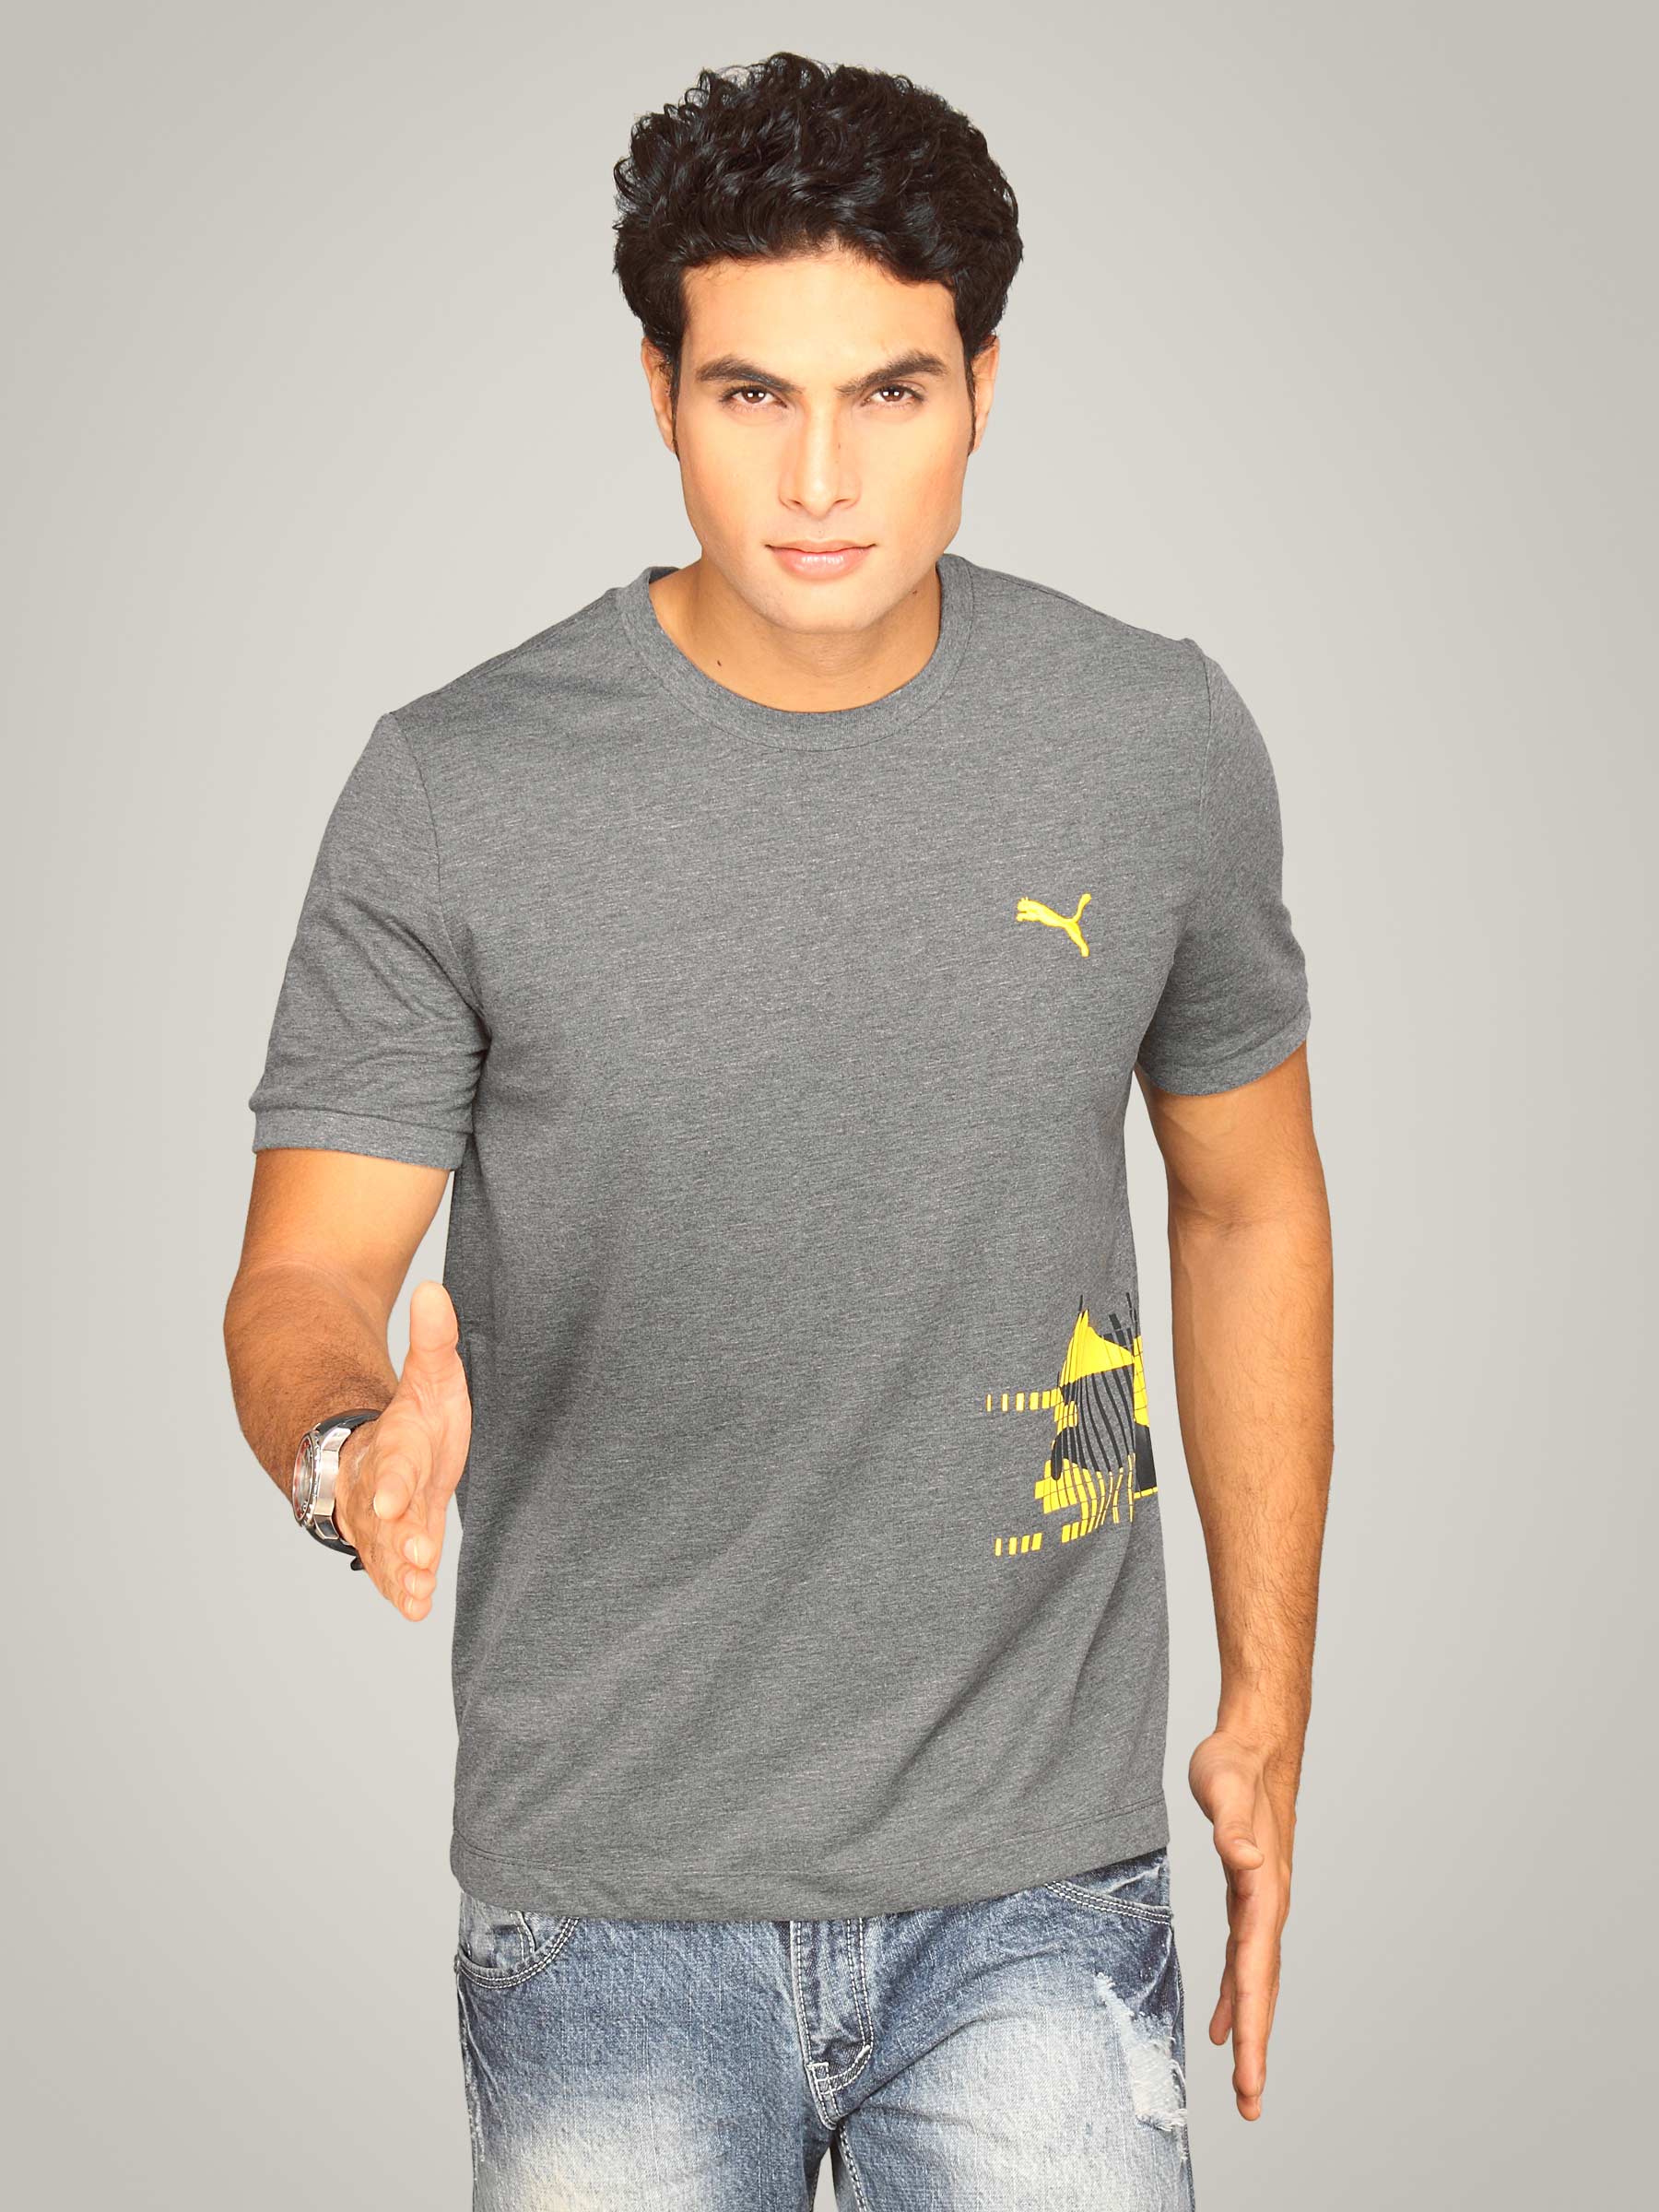 Puma Men's Summer Graphic Charcoal T-shirt